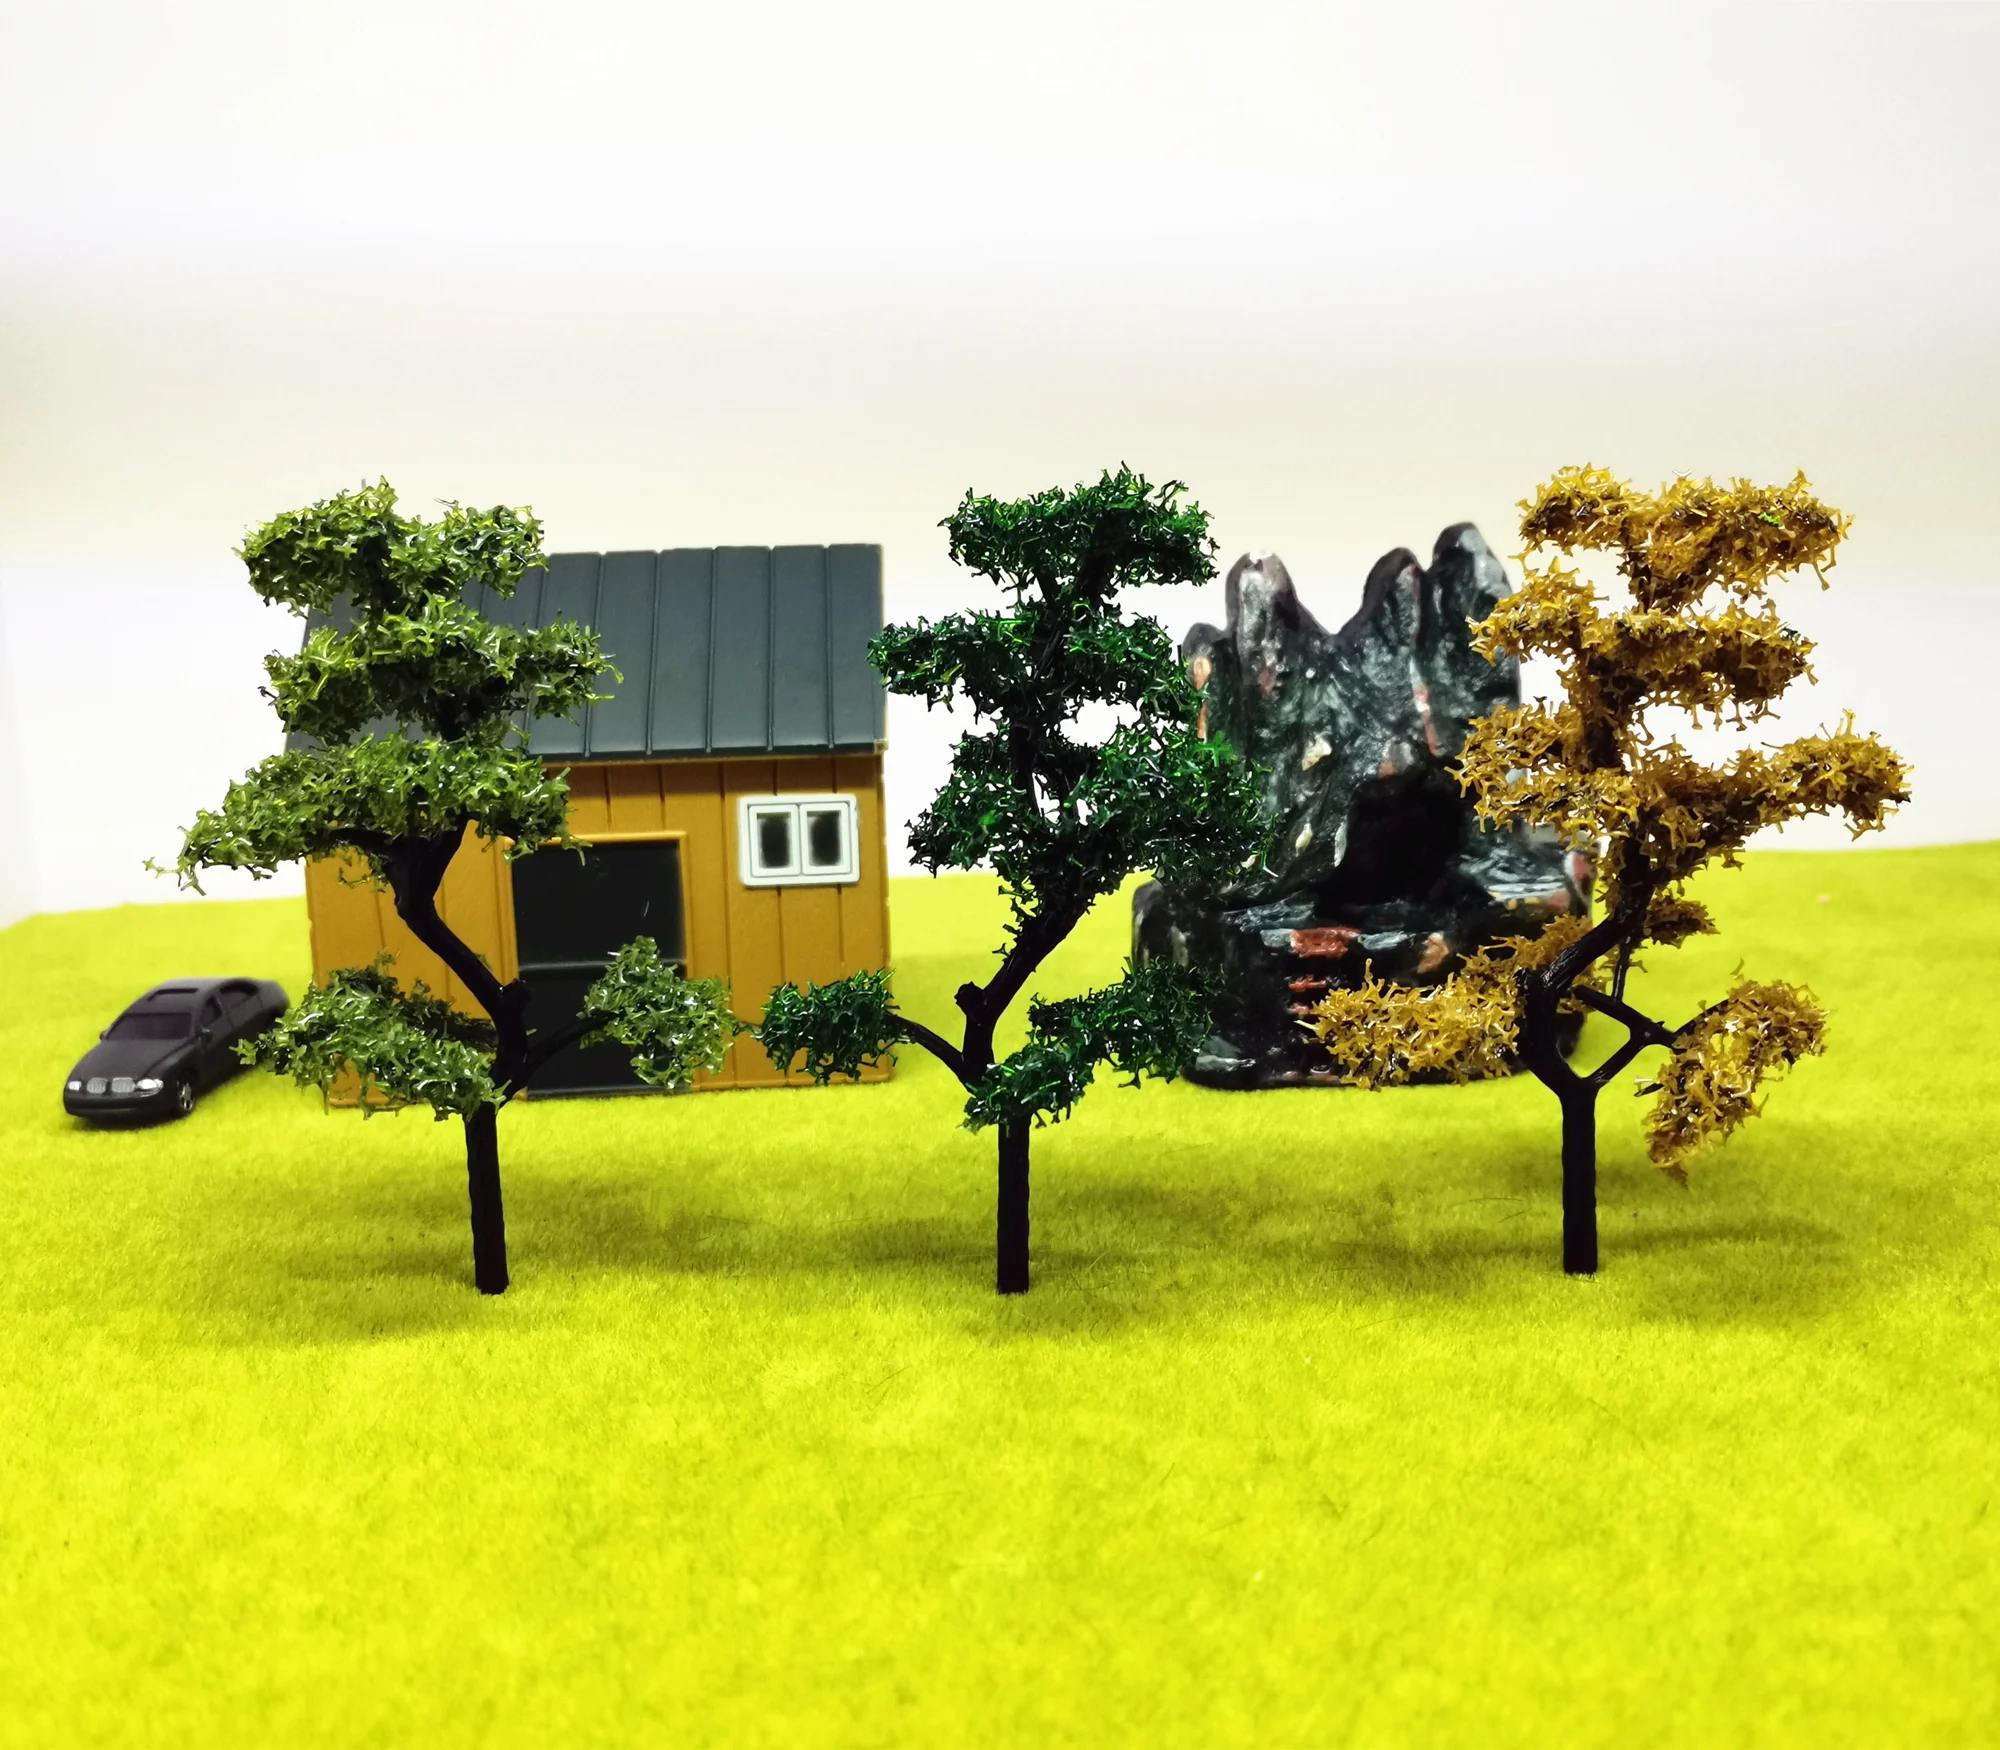 15 Pcs Rainforest Diorama Supplies Landscape Model Tree Model Trees